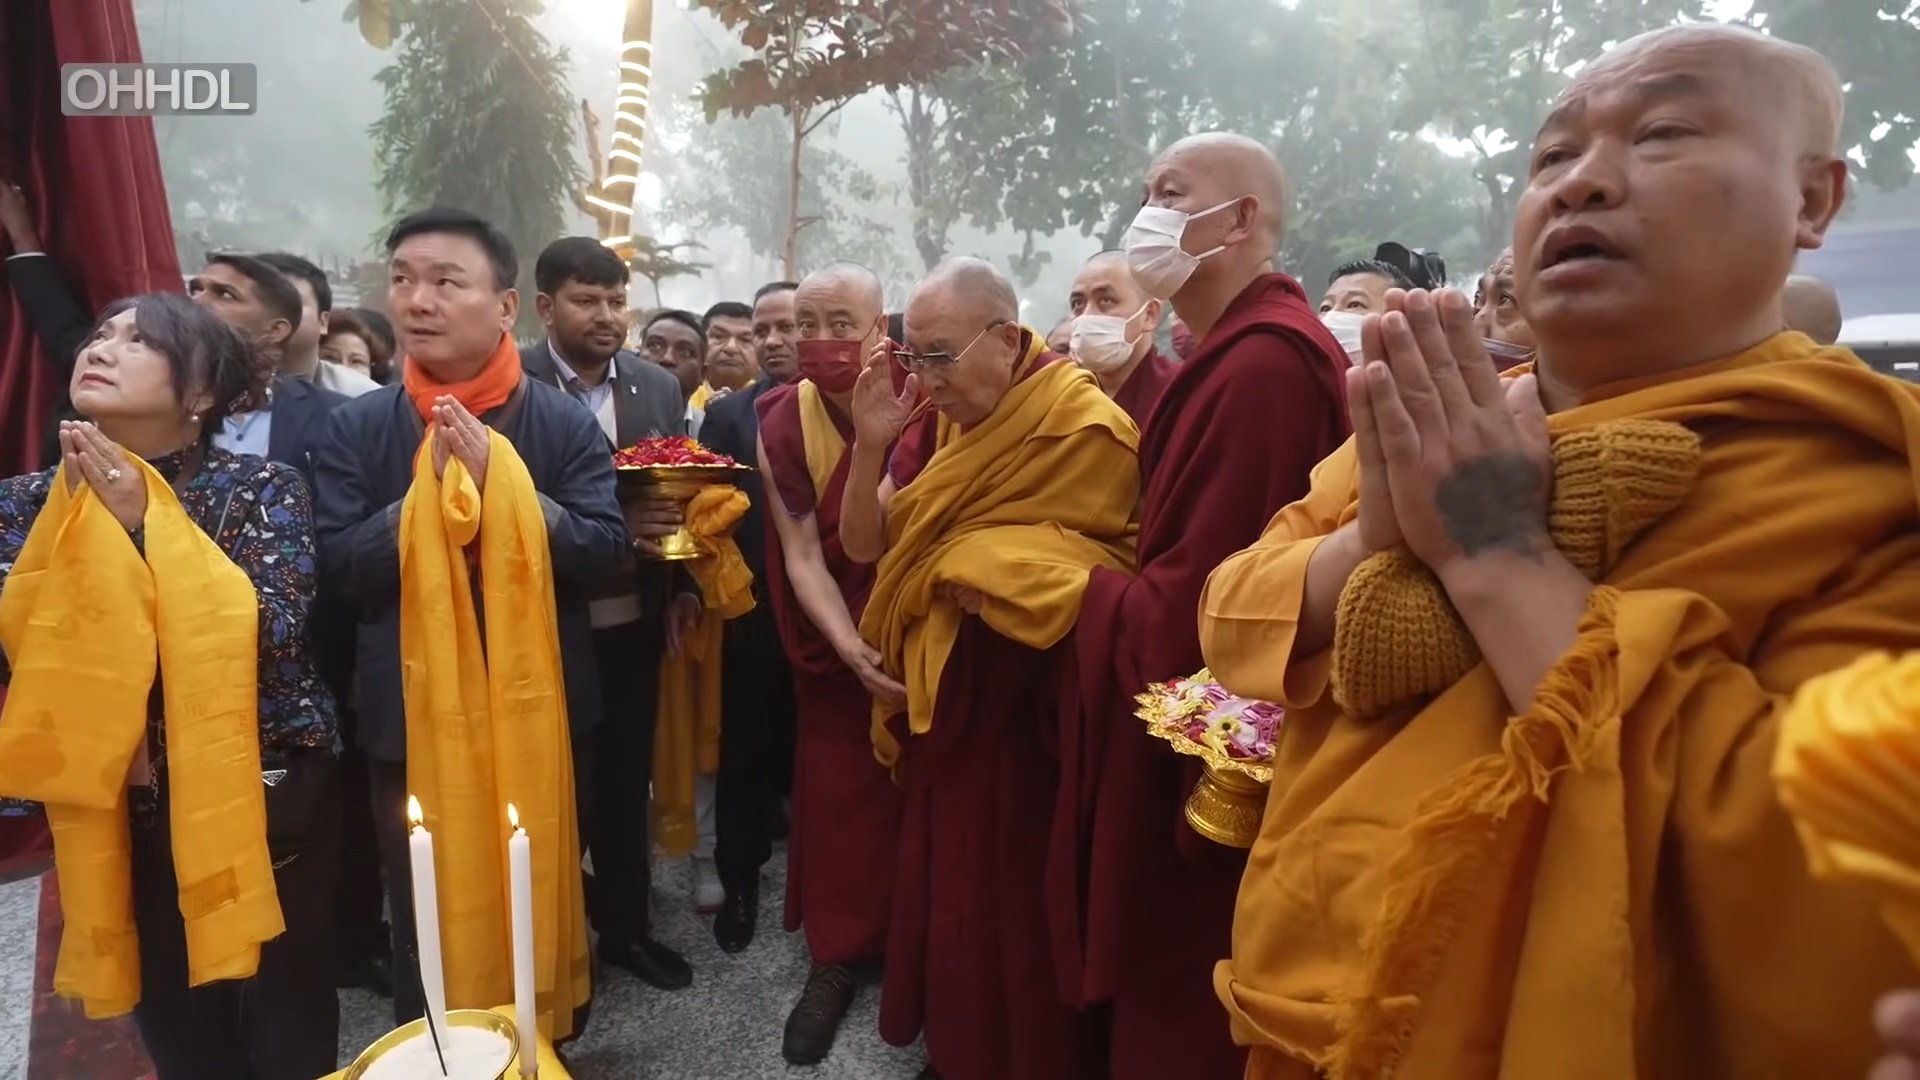 Мир как никогда разделен на "своих" и "чужих" – Далай-лама